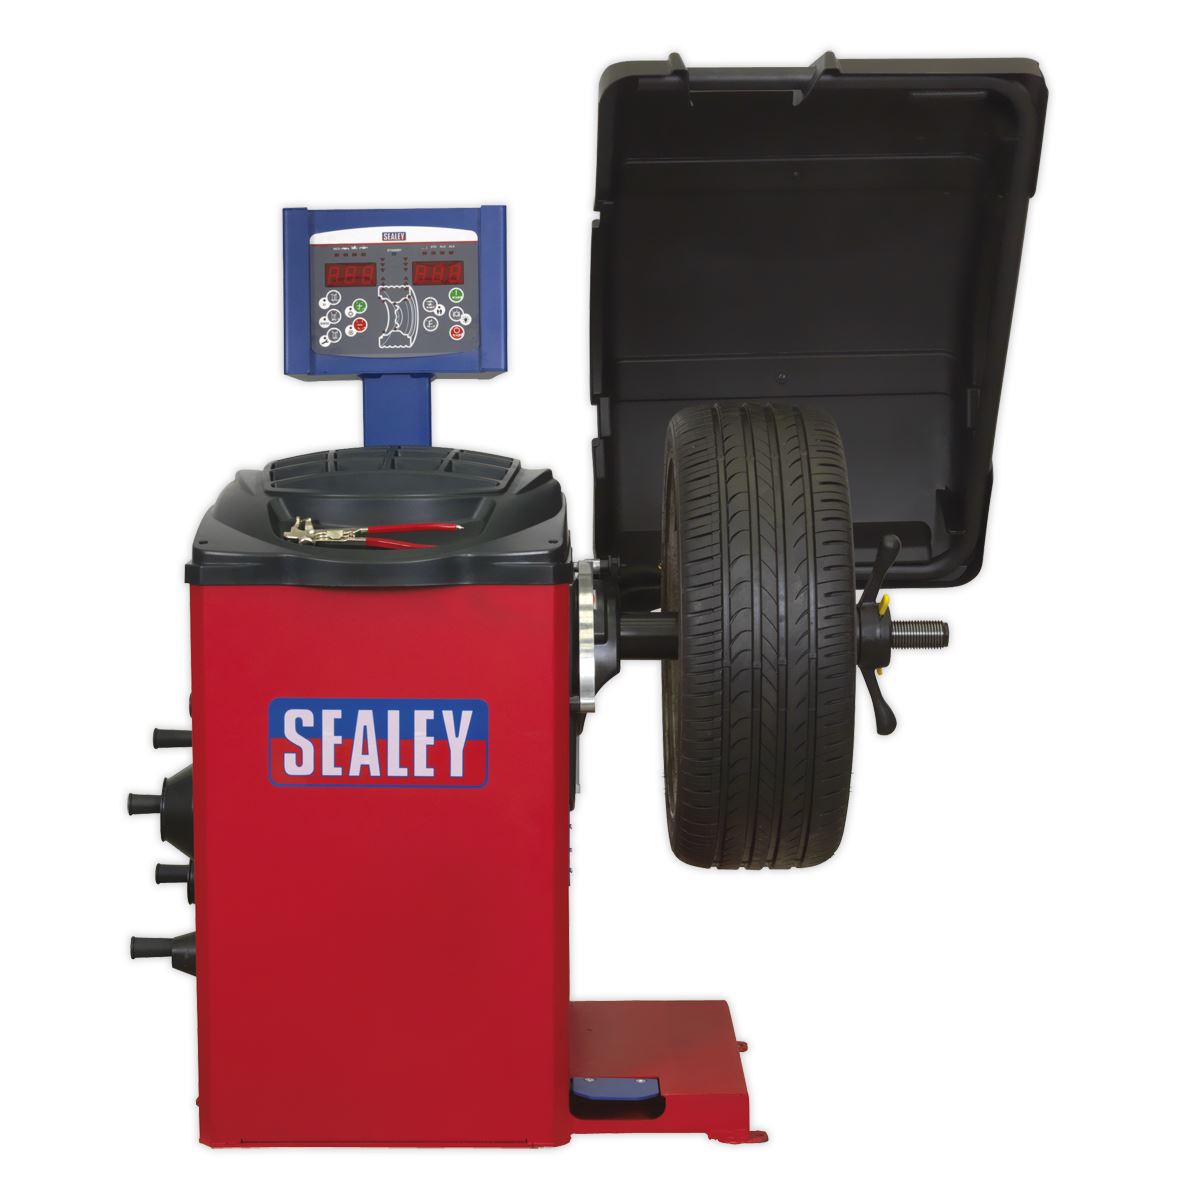 Sealey Wheel Balancer - Semi-Automatic